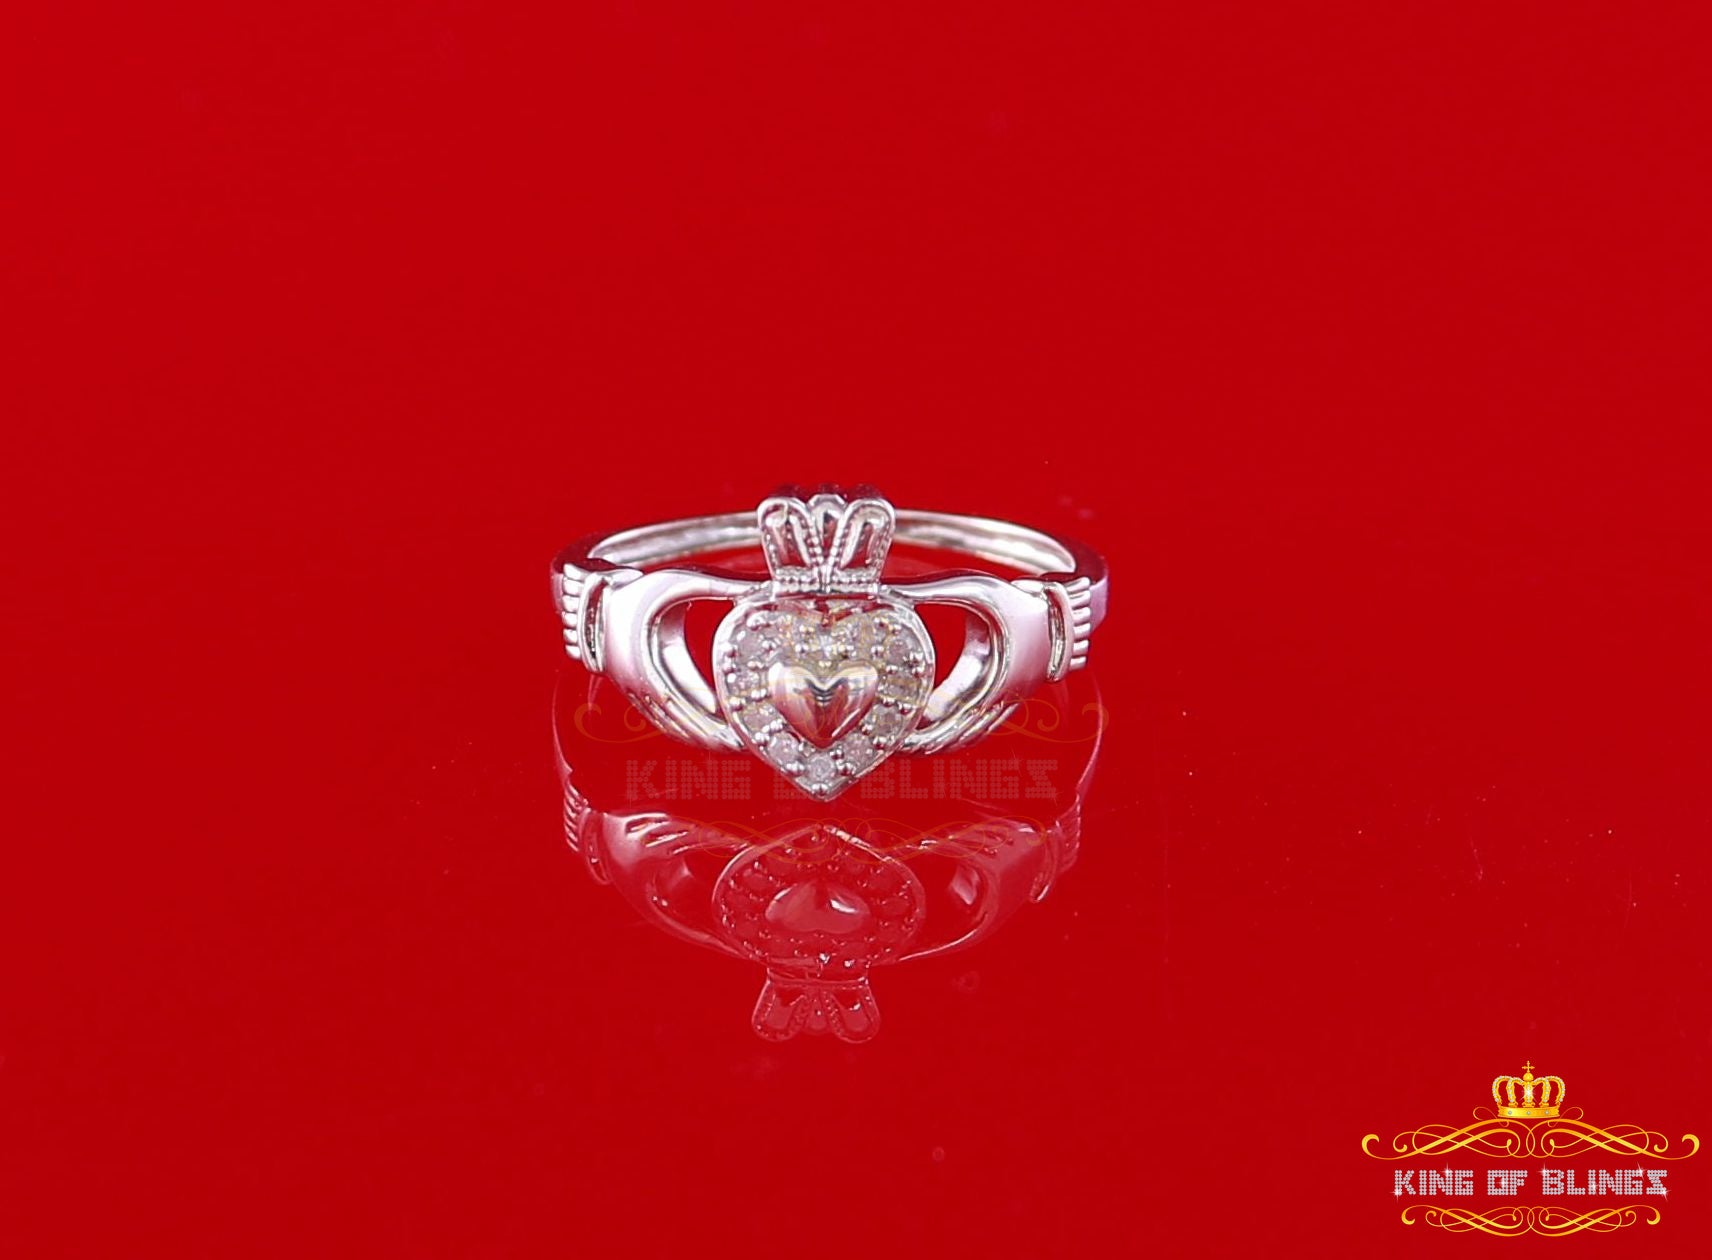 King Of Bling's 0.03 CT Real Diamond Womens 925 Sterling Silver White Heart Shape Ring Size 7 KING OF BLINGS